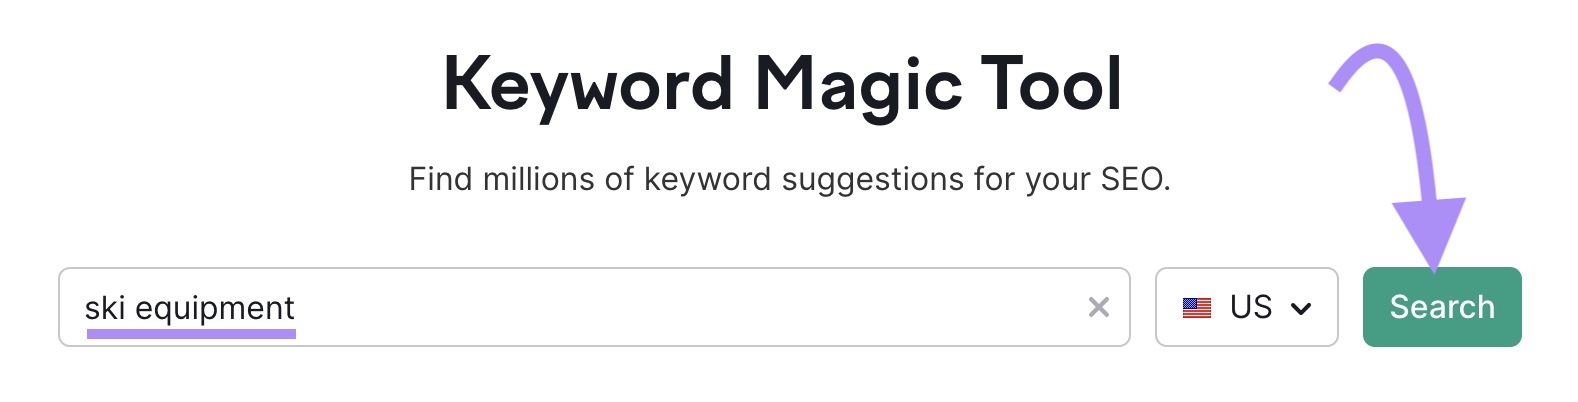 Search barroom  successful  Keyword Magic Tool.